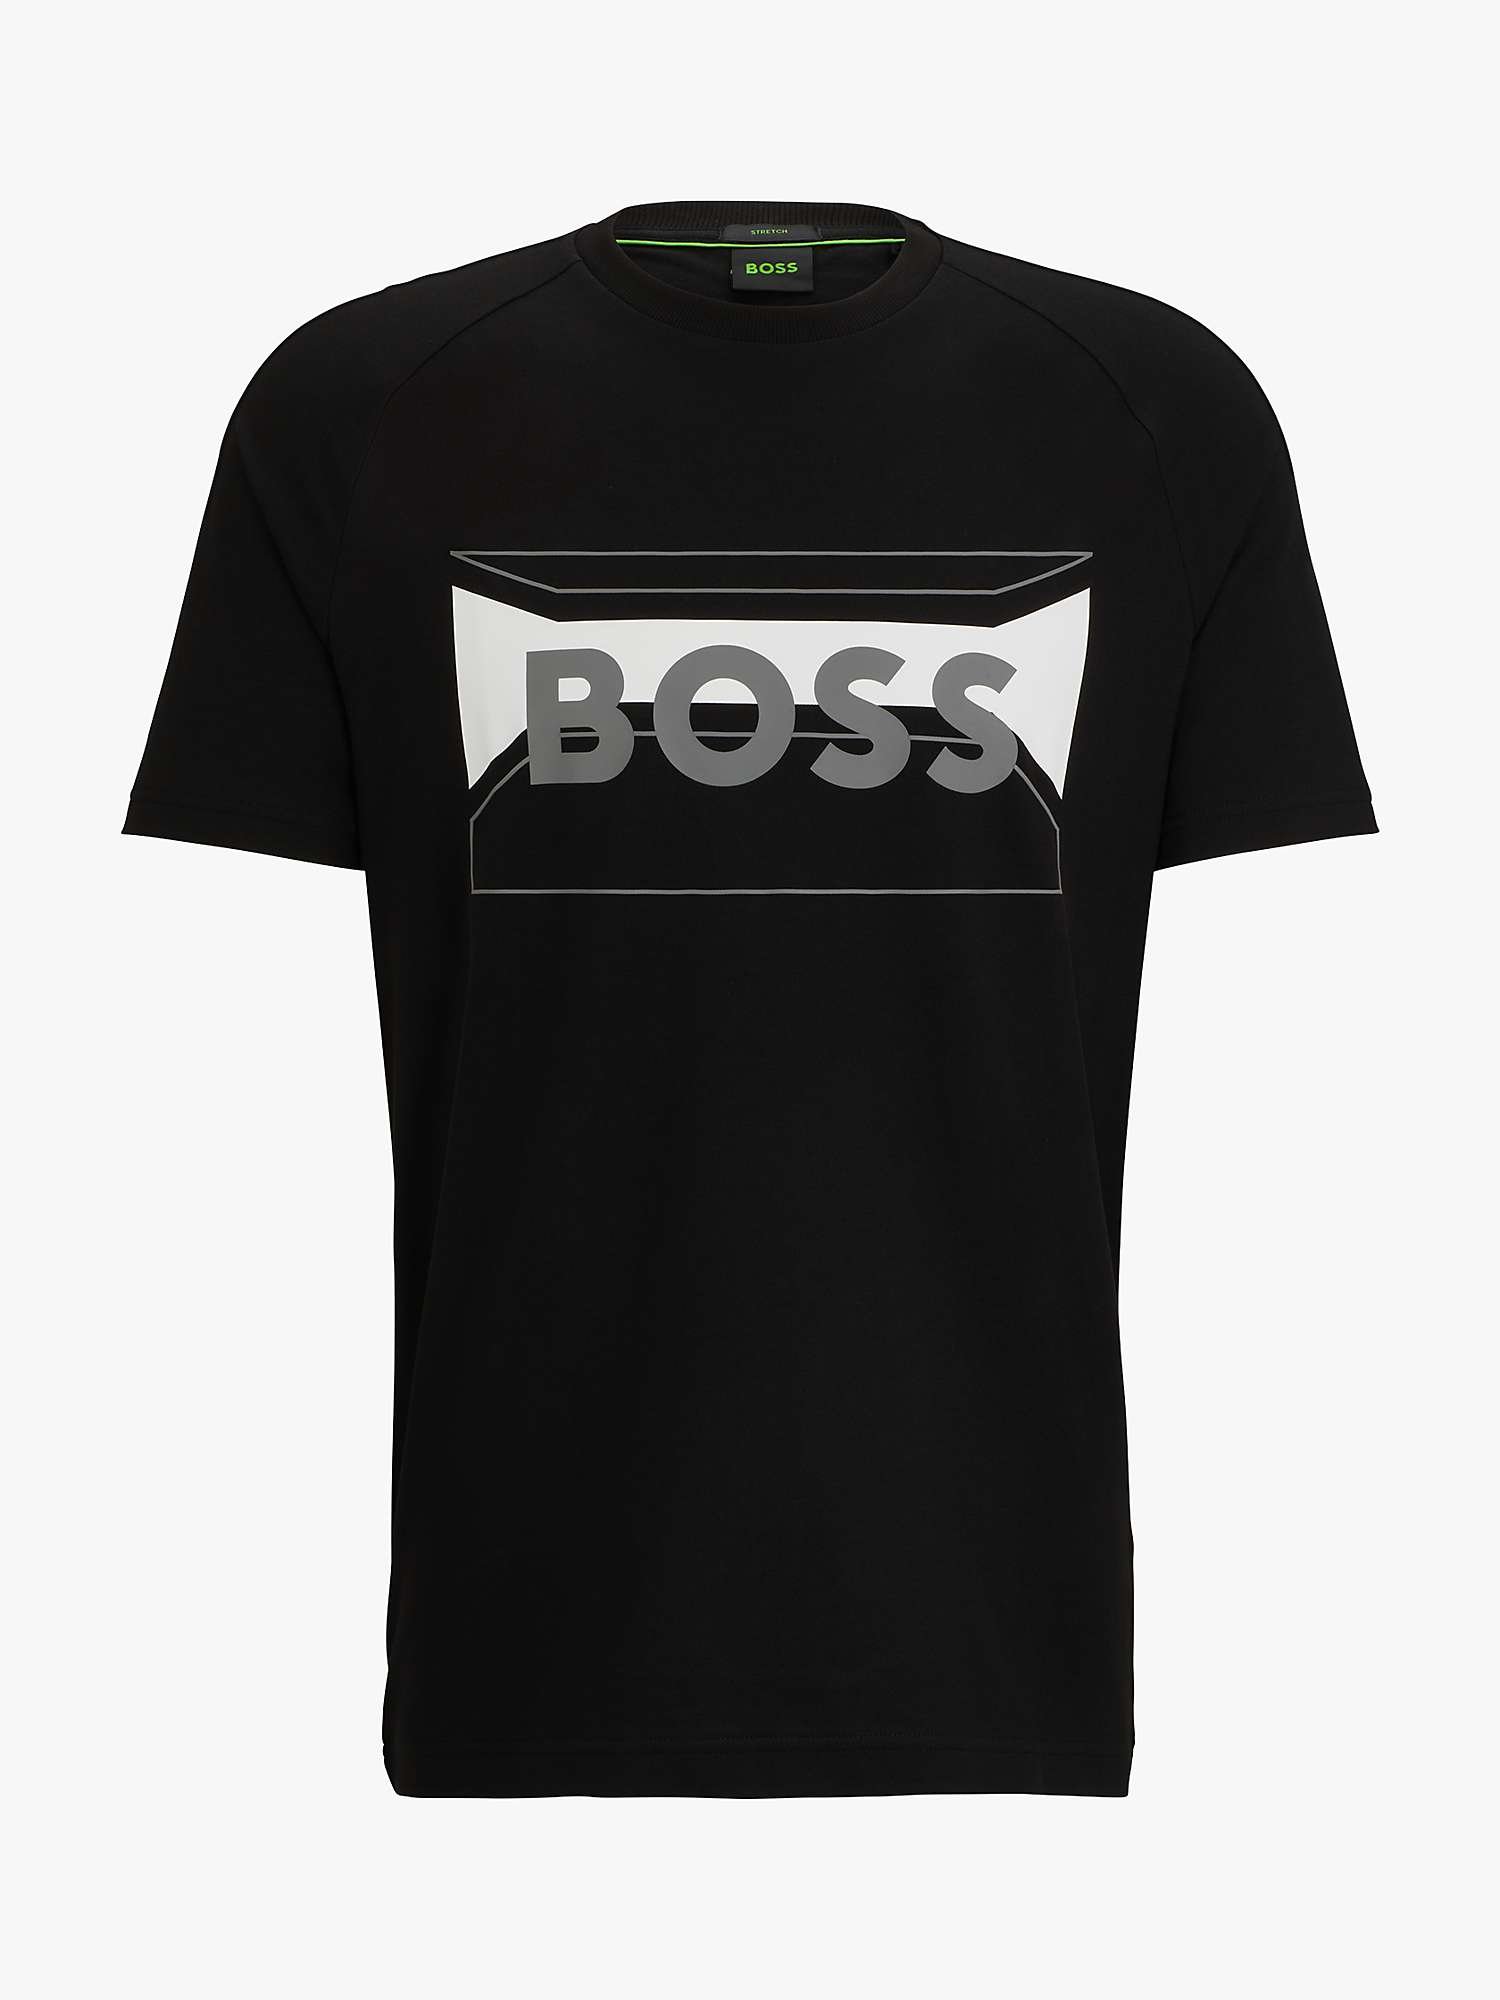 Buy BOSS Tee 2 Short Sleeve T-Shirt, Black Online at johnlewis.com